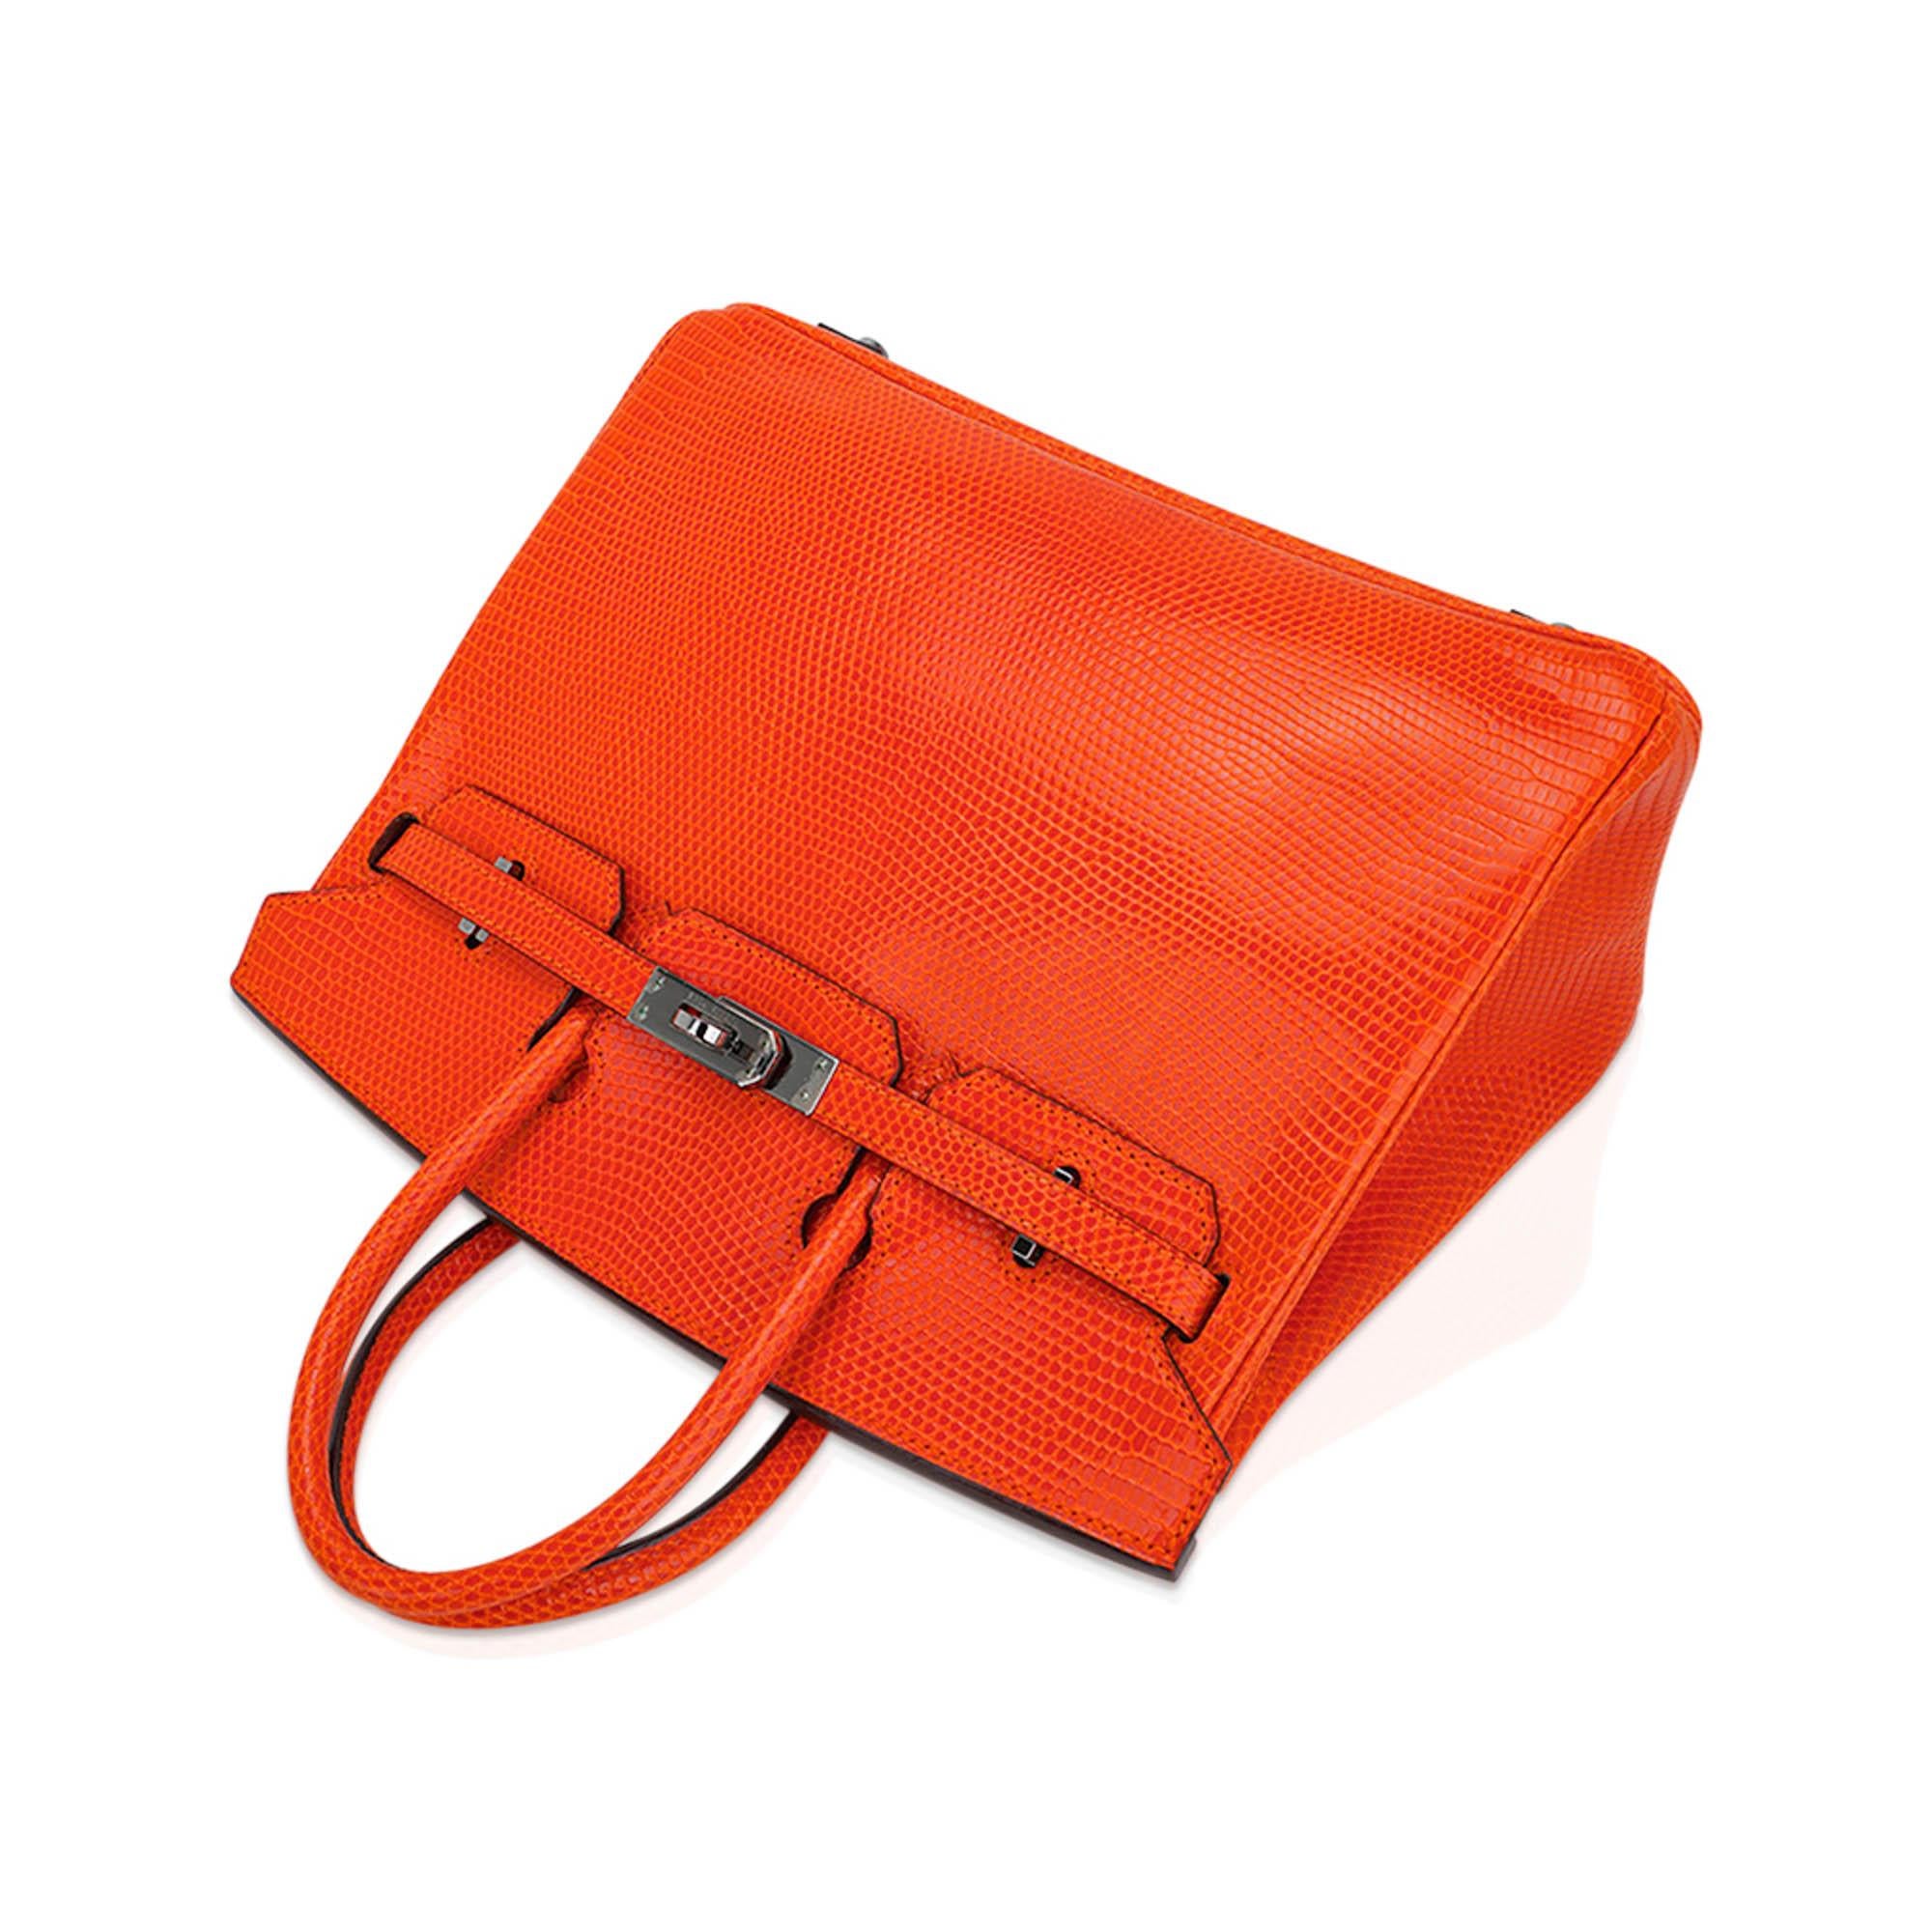 Hermes Birkin 25 Orange Tangerine Lizard Limited Edition Bag Ruthenium Hardware For Sale 3